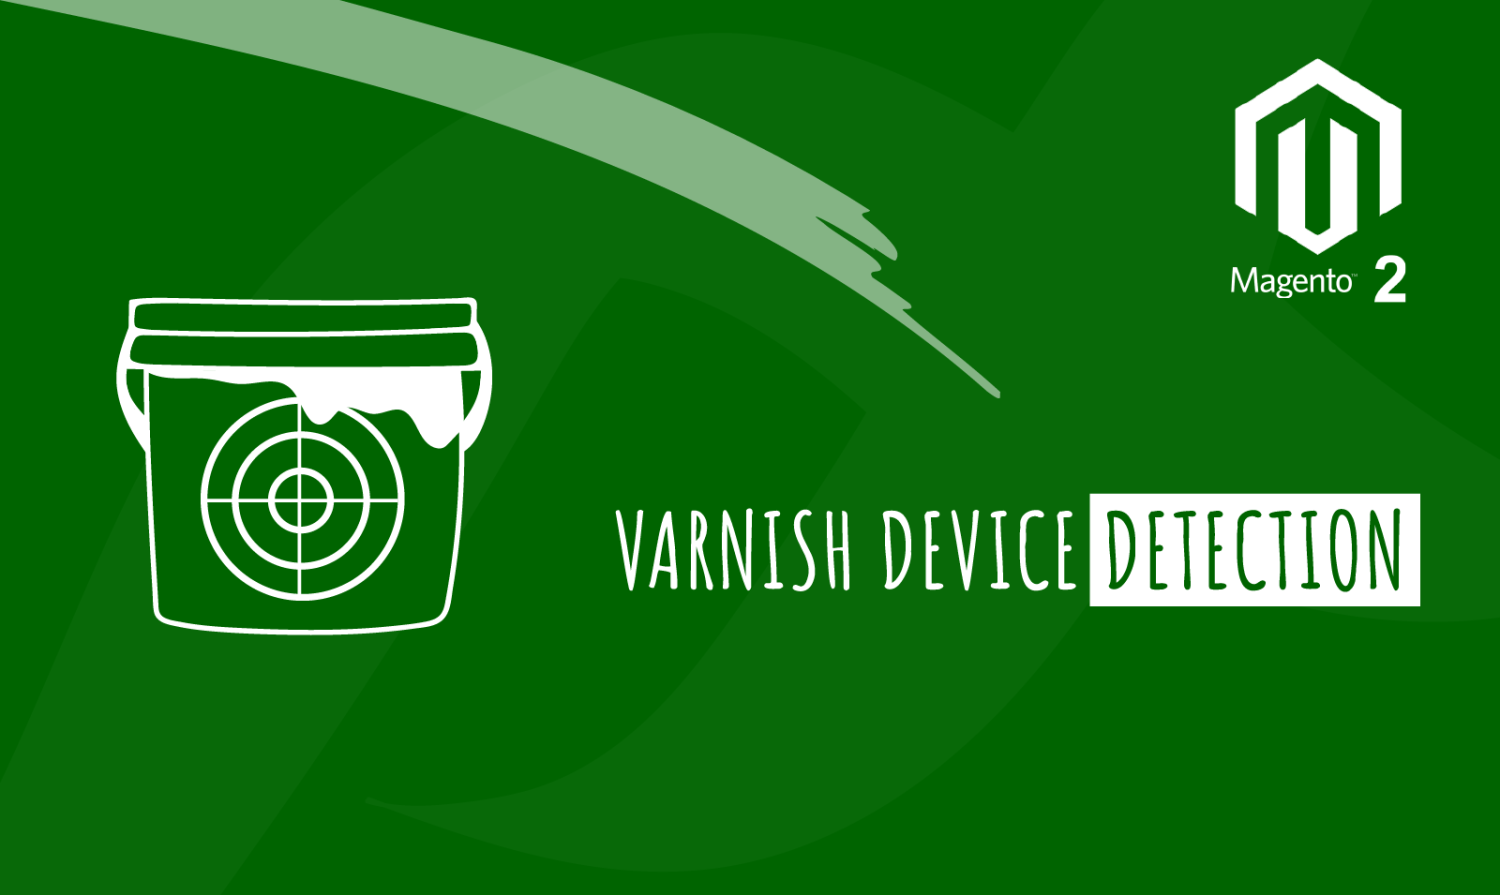 Magento 2 Varnish Device Detection